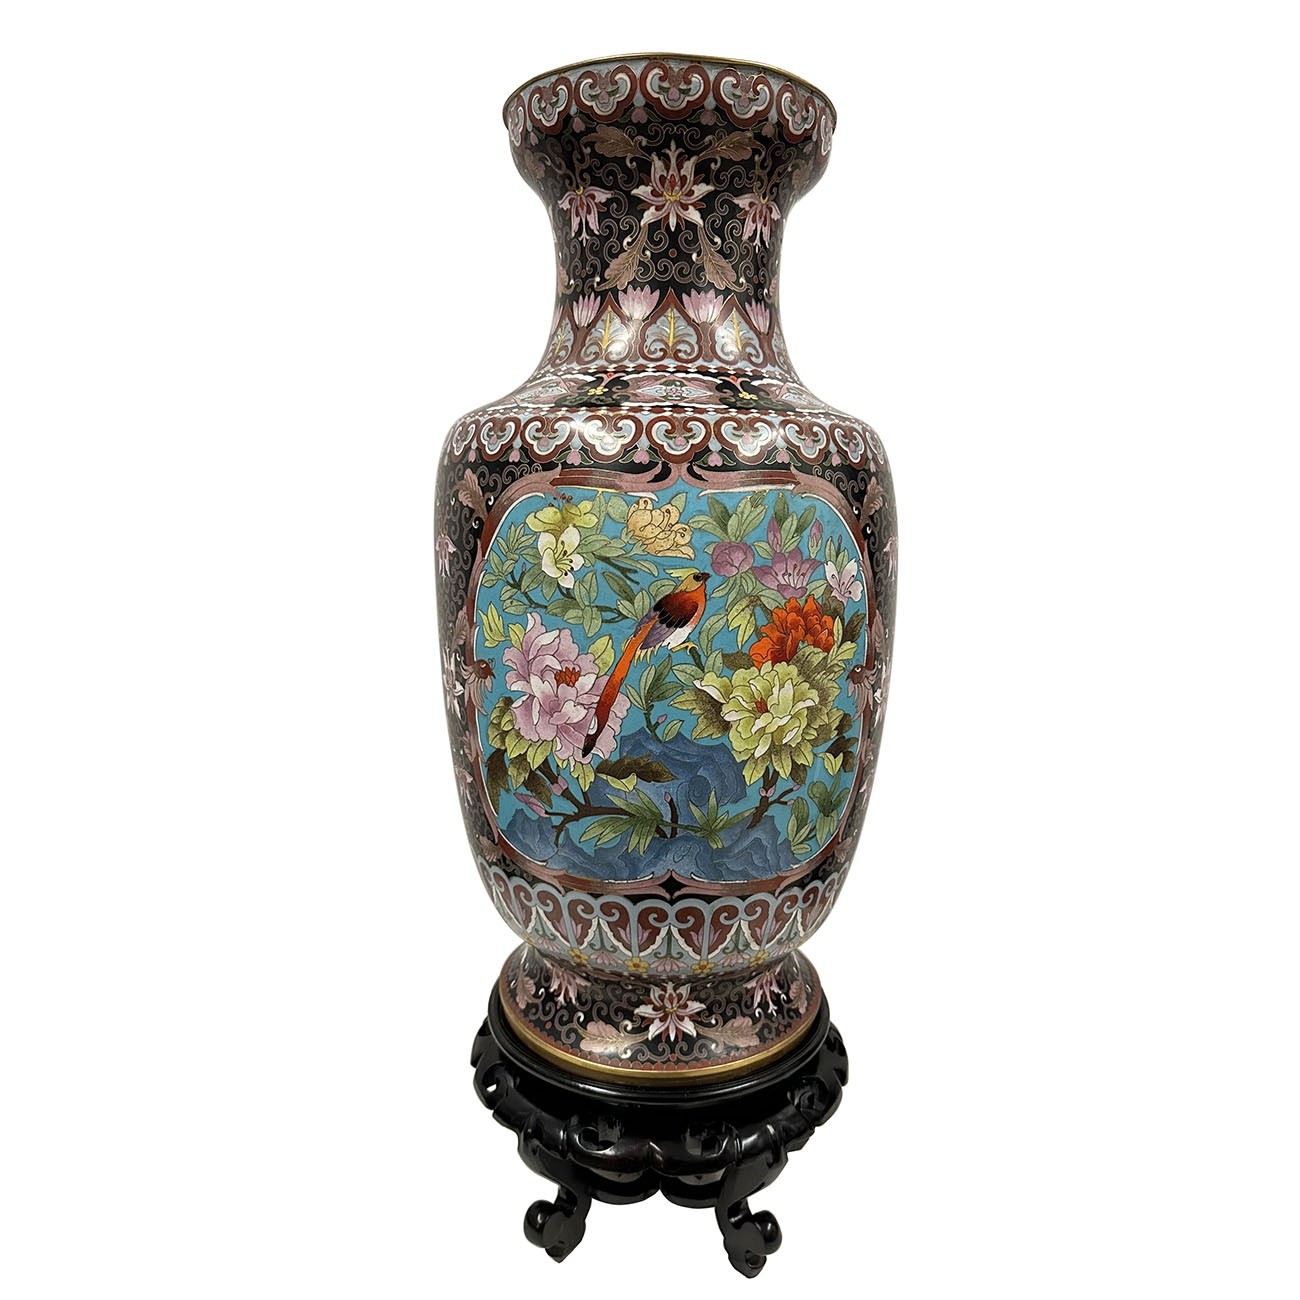 Mid-20th Century Chinese Cloisonne Vase